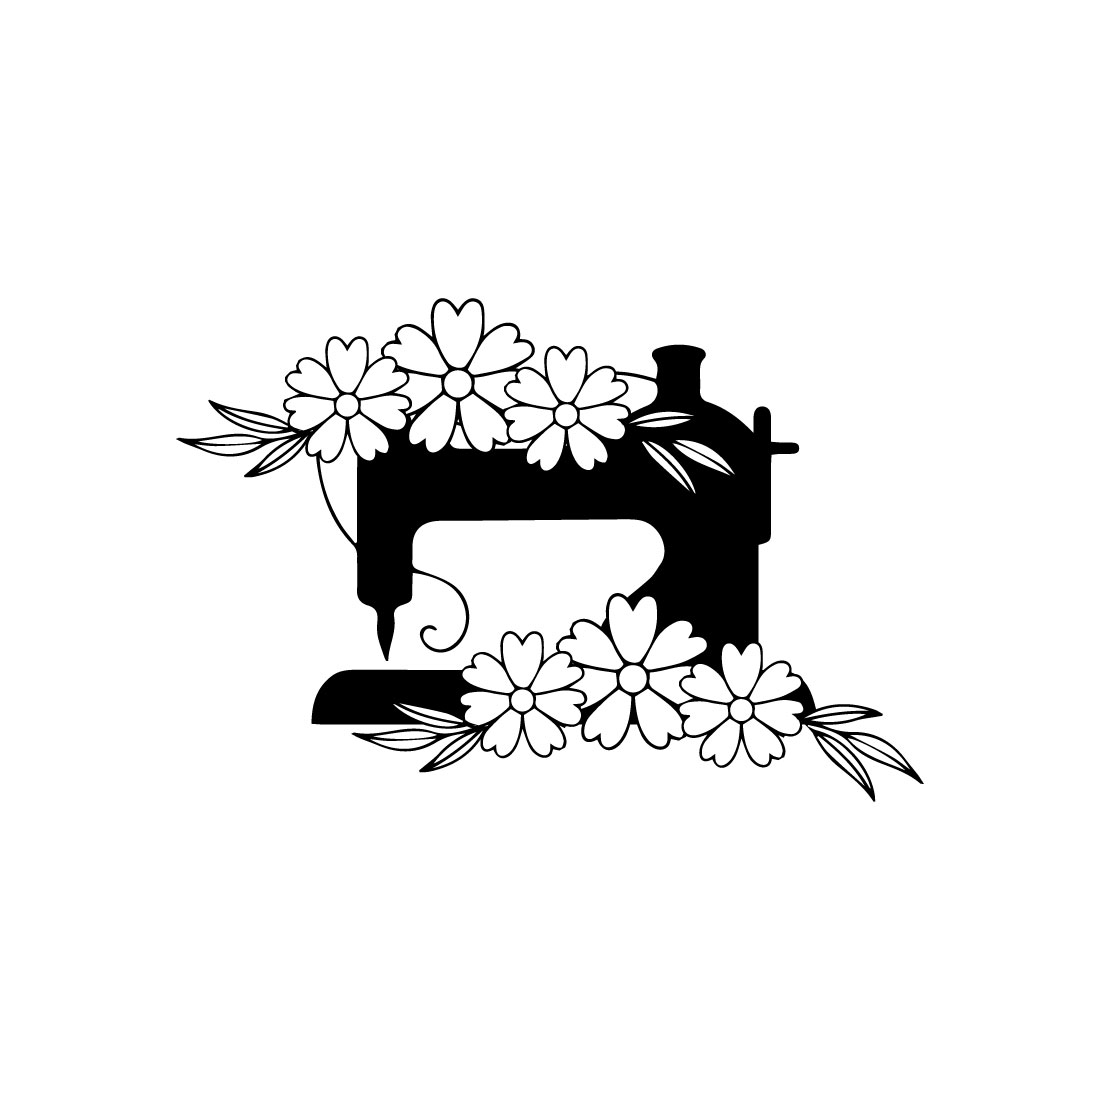 Free sewing machine logo cover image.